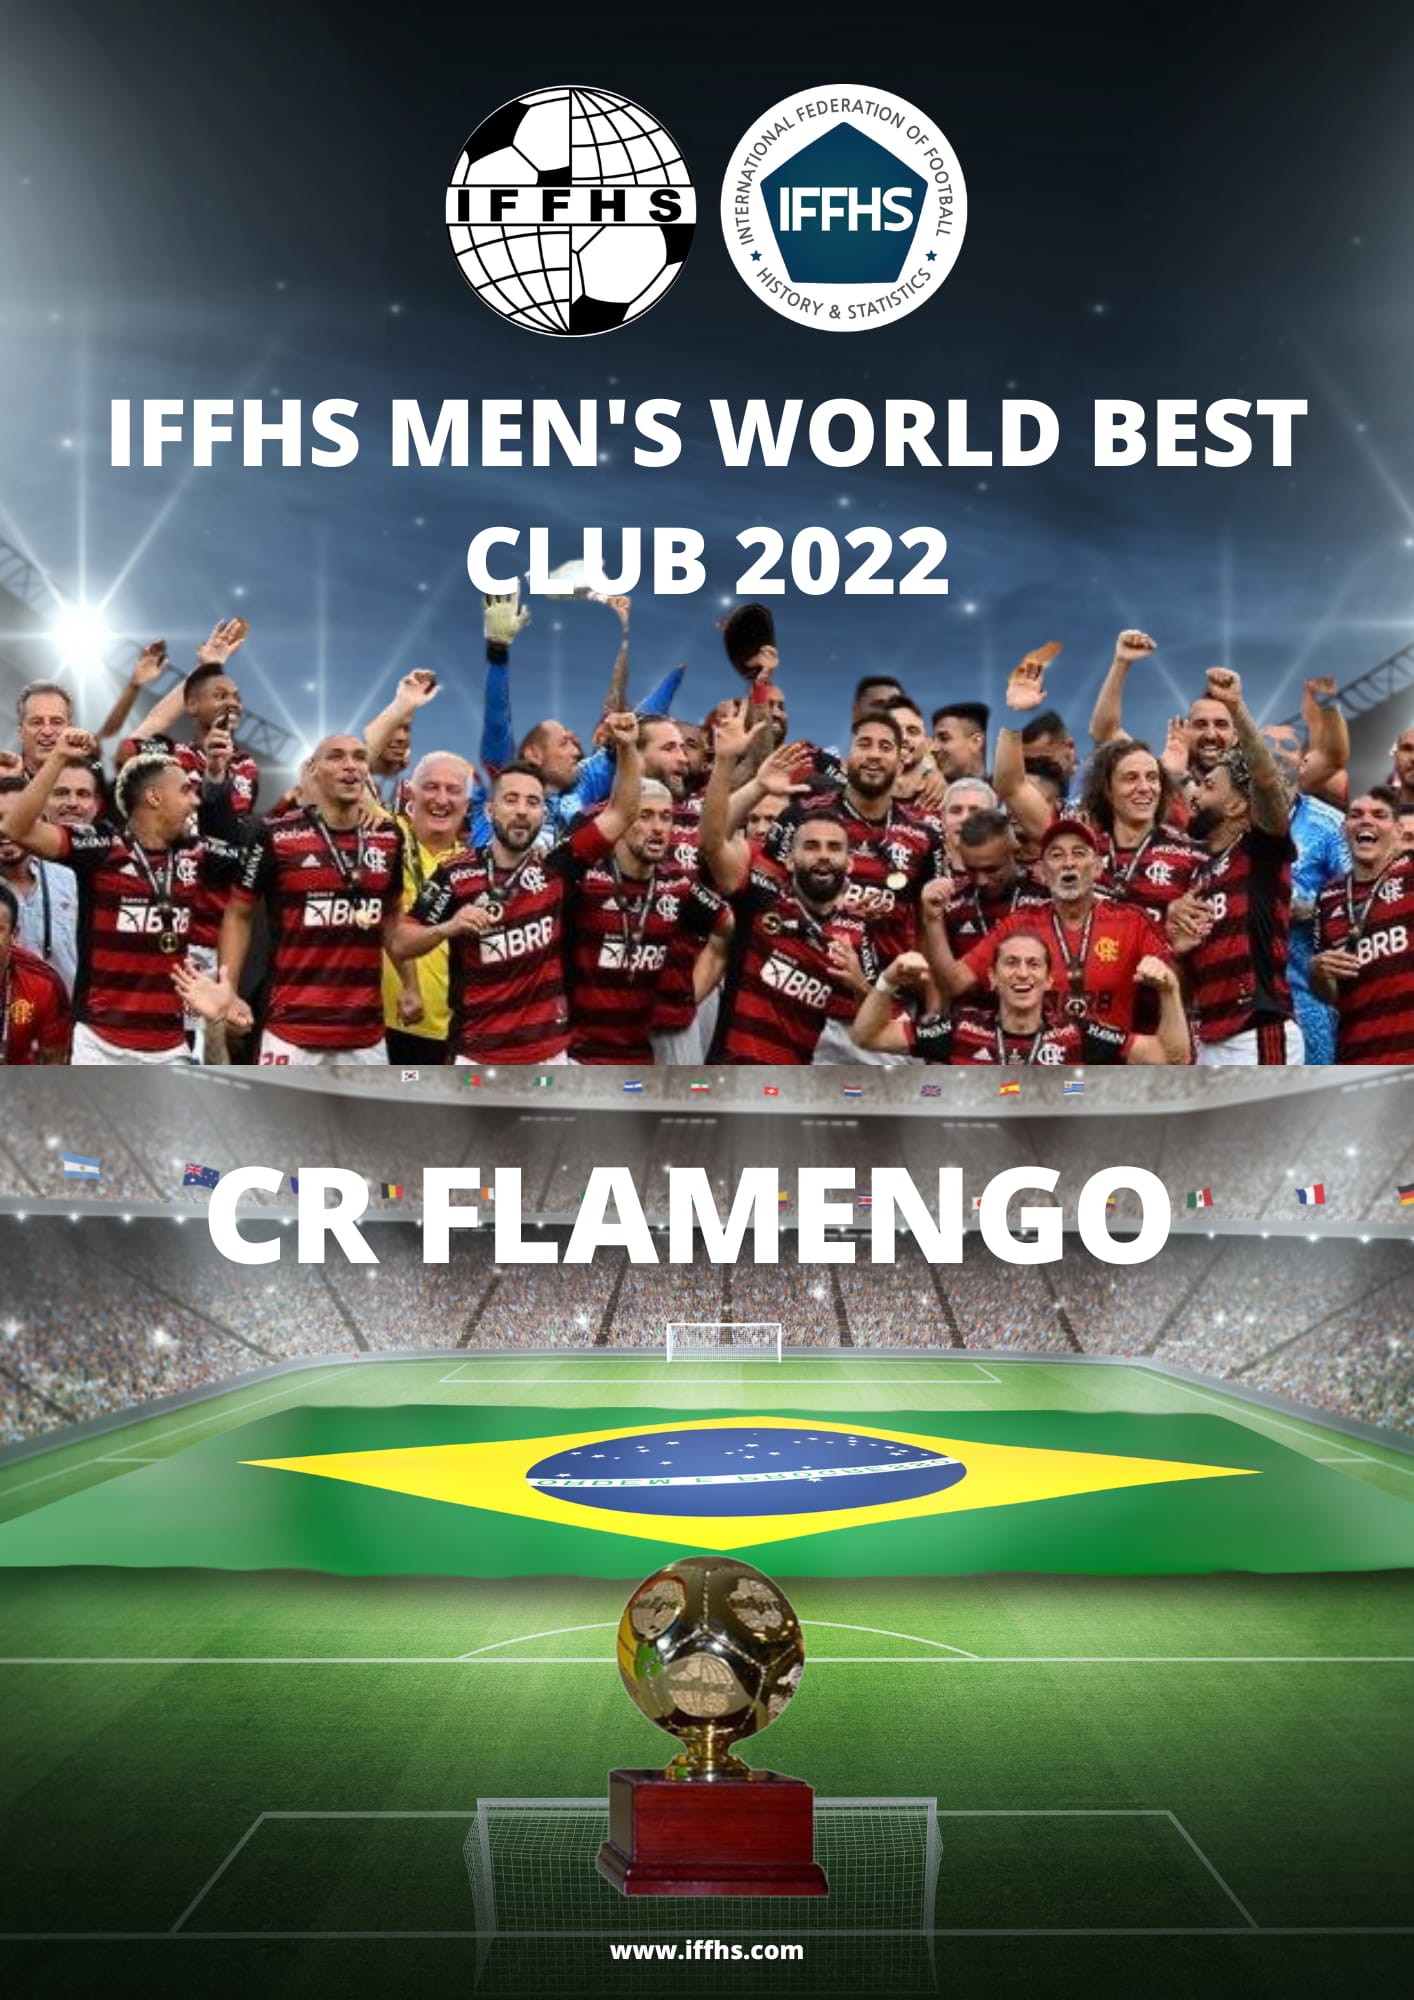 🔴Men's FIFA World Ranking Update November 2023 - FIFA Ranking